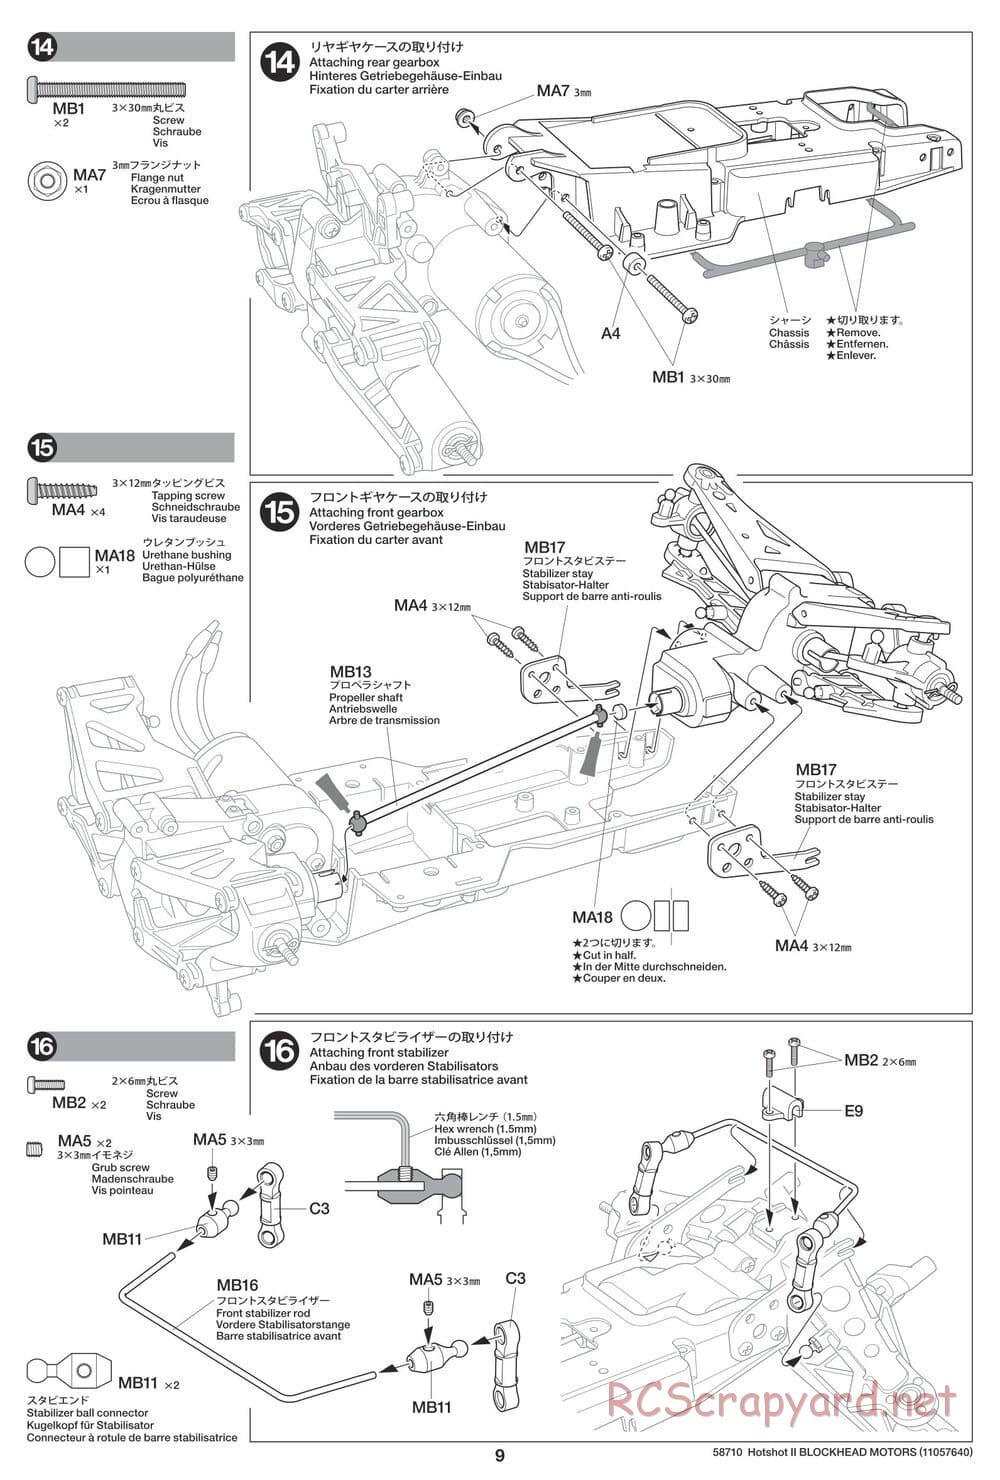 Tamiya - Hotshot II Blockhead Motors - HS Chassis - Manual - Page 9